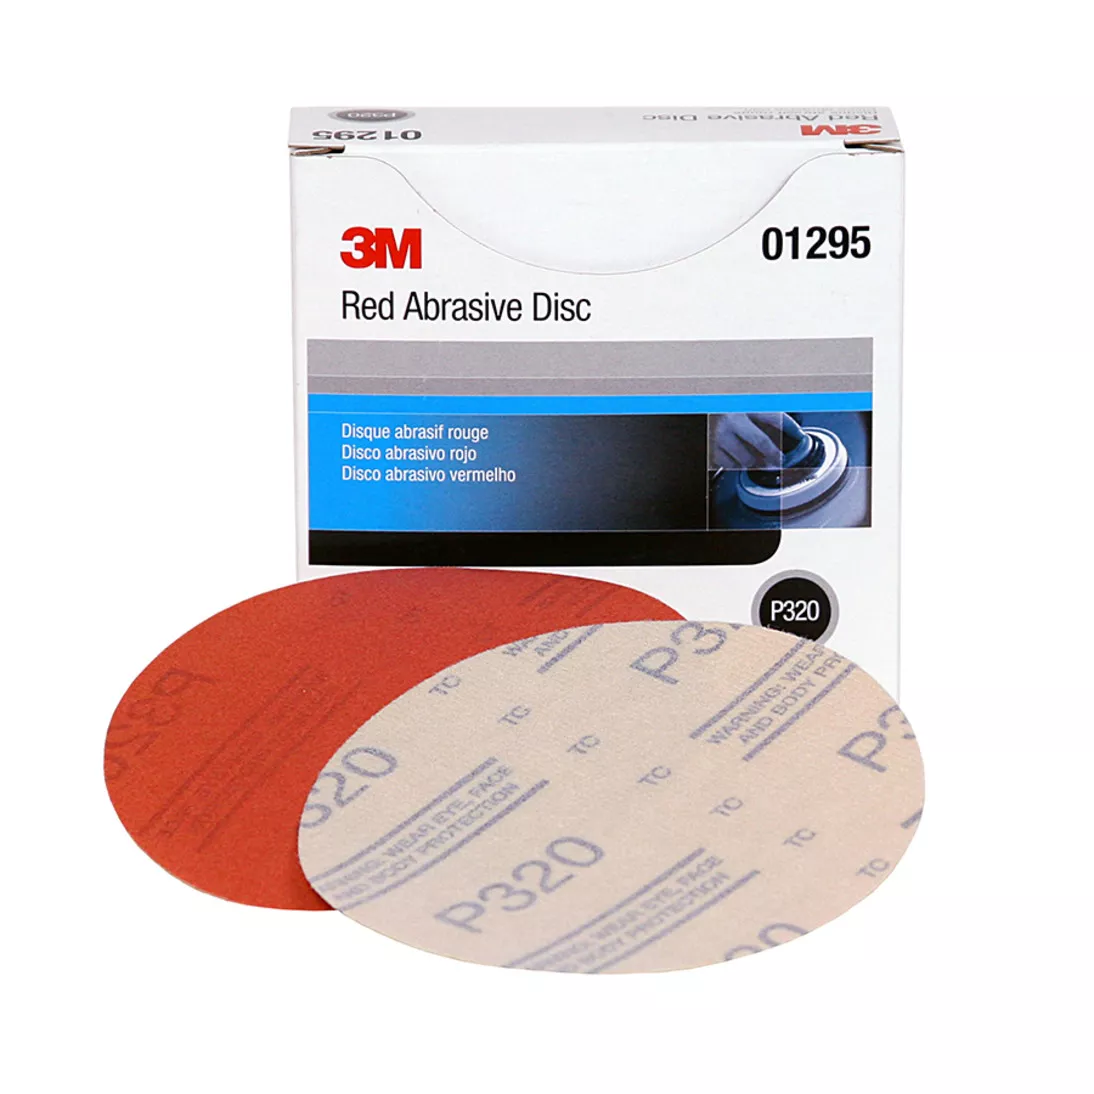 3M™ Hookit™ Red Abrasive Disc, 01295, 5 in, P320, 50 discs per carton, 6
cartons per case